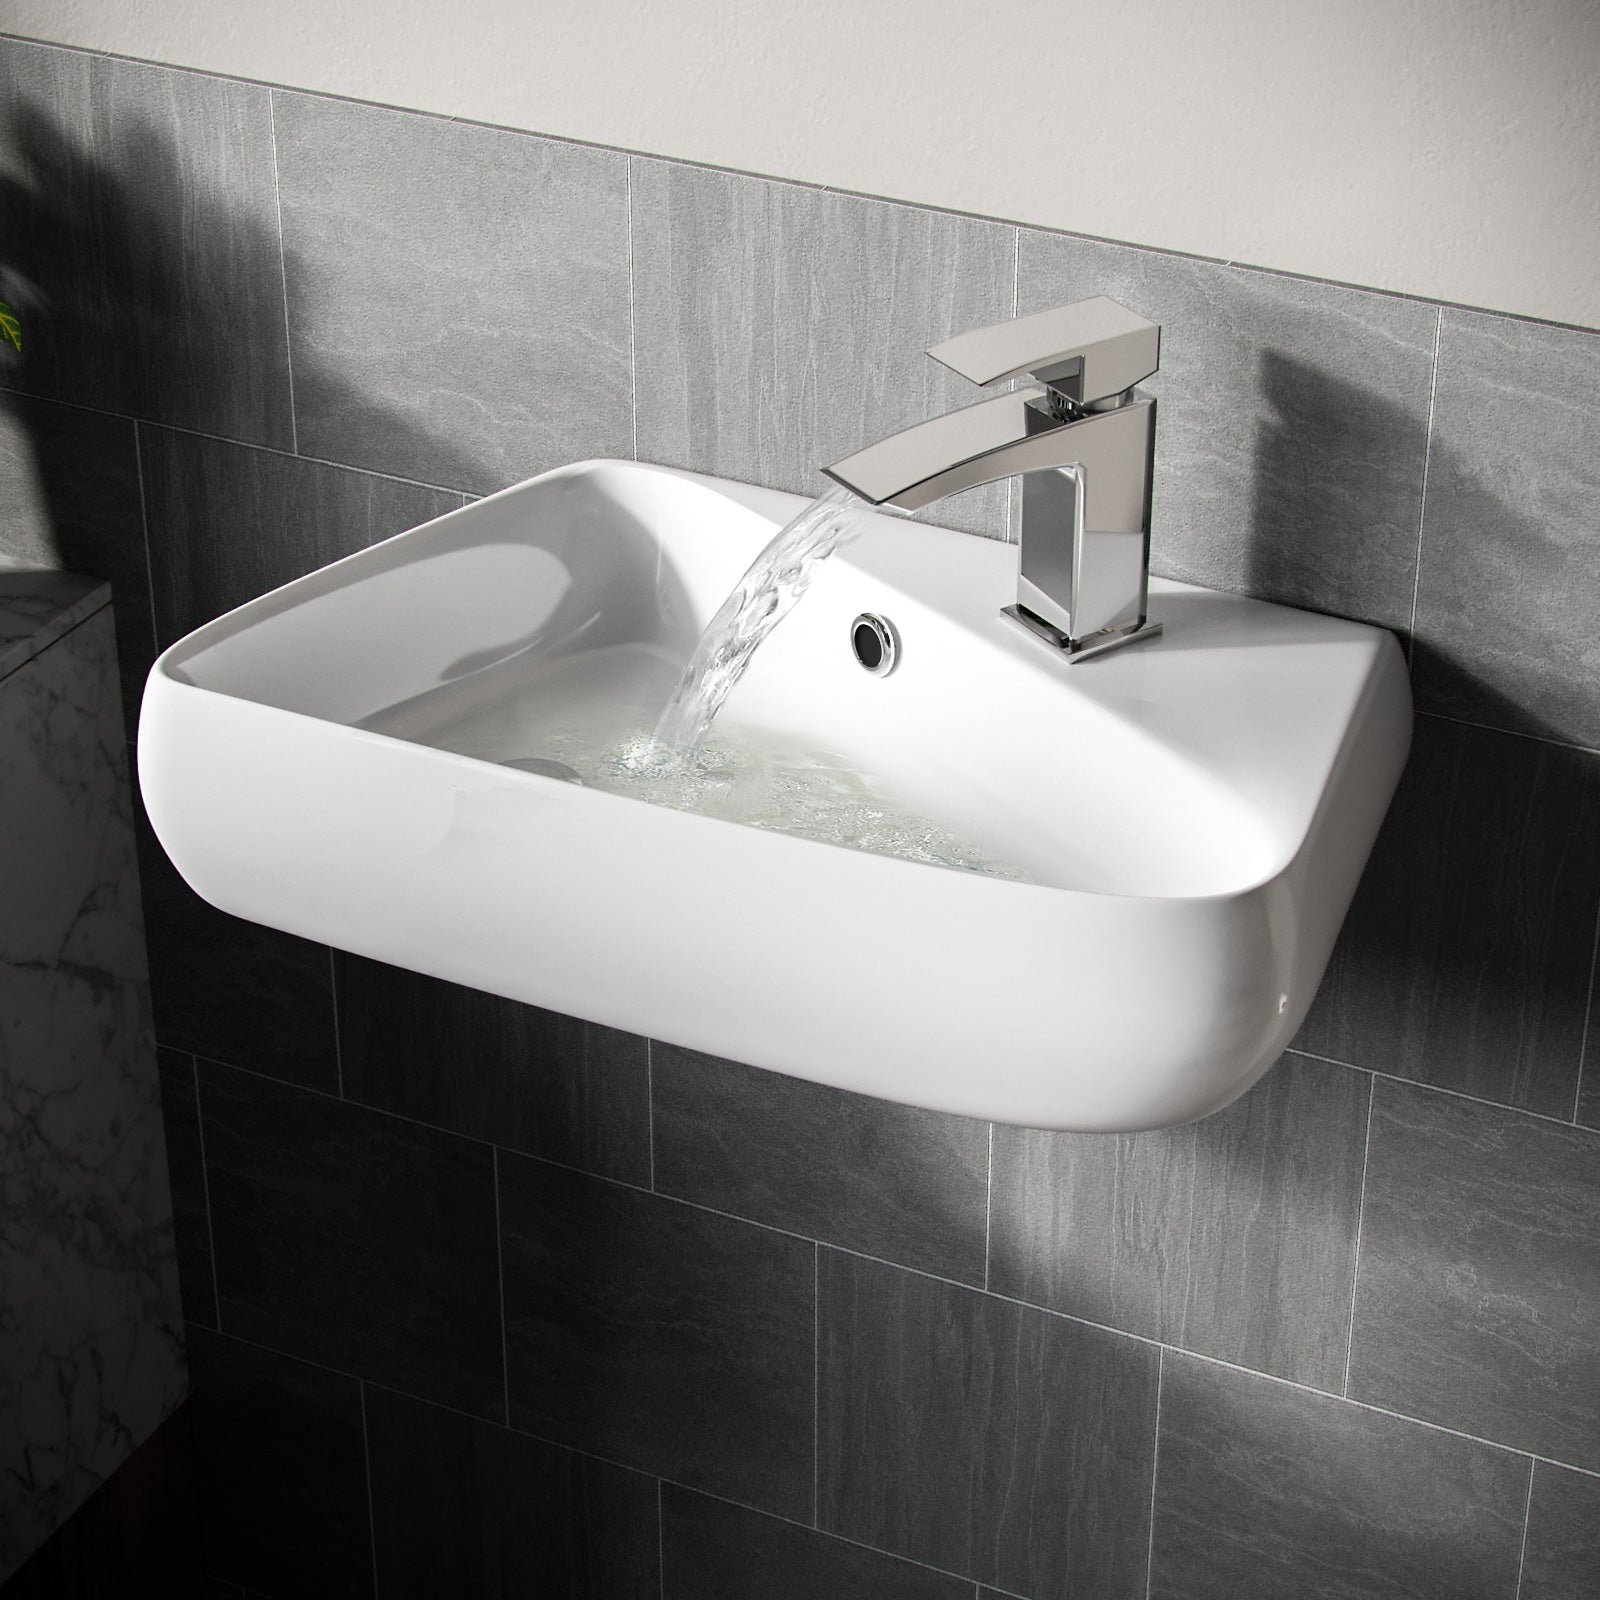 Tulla 455 x 275mm Rectangle Cloakroom Wall Hung Basin Sink